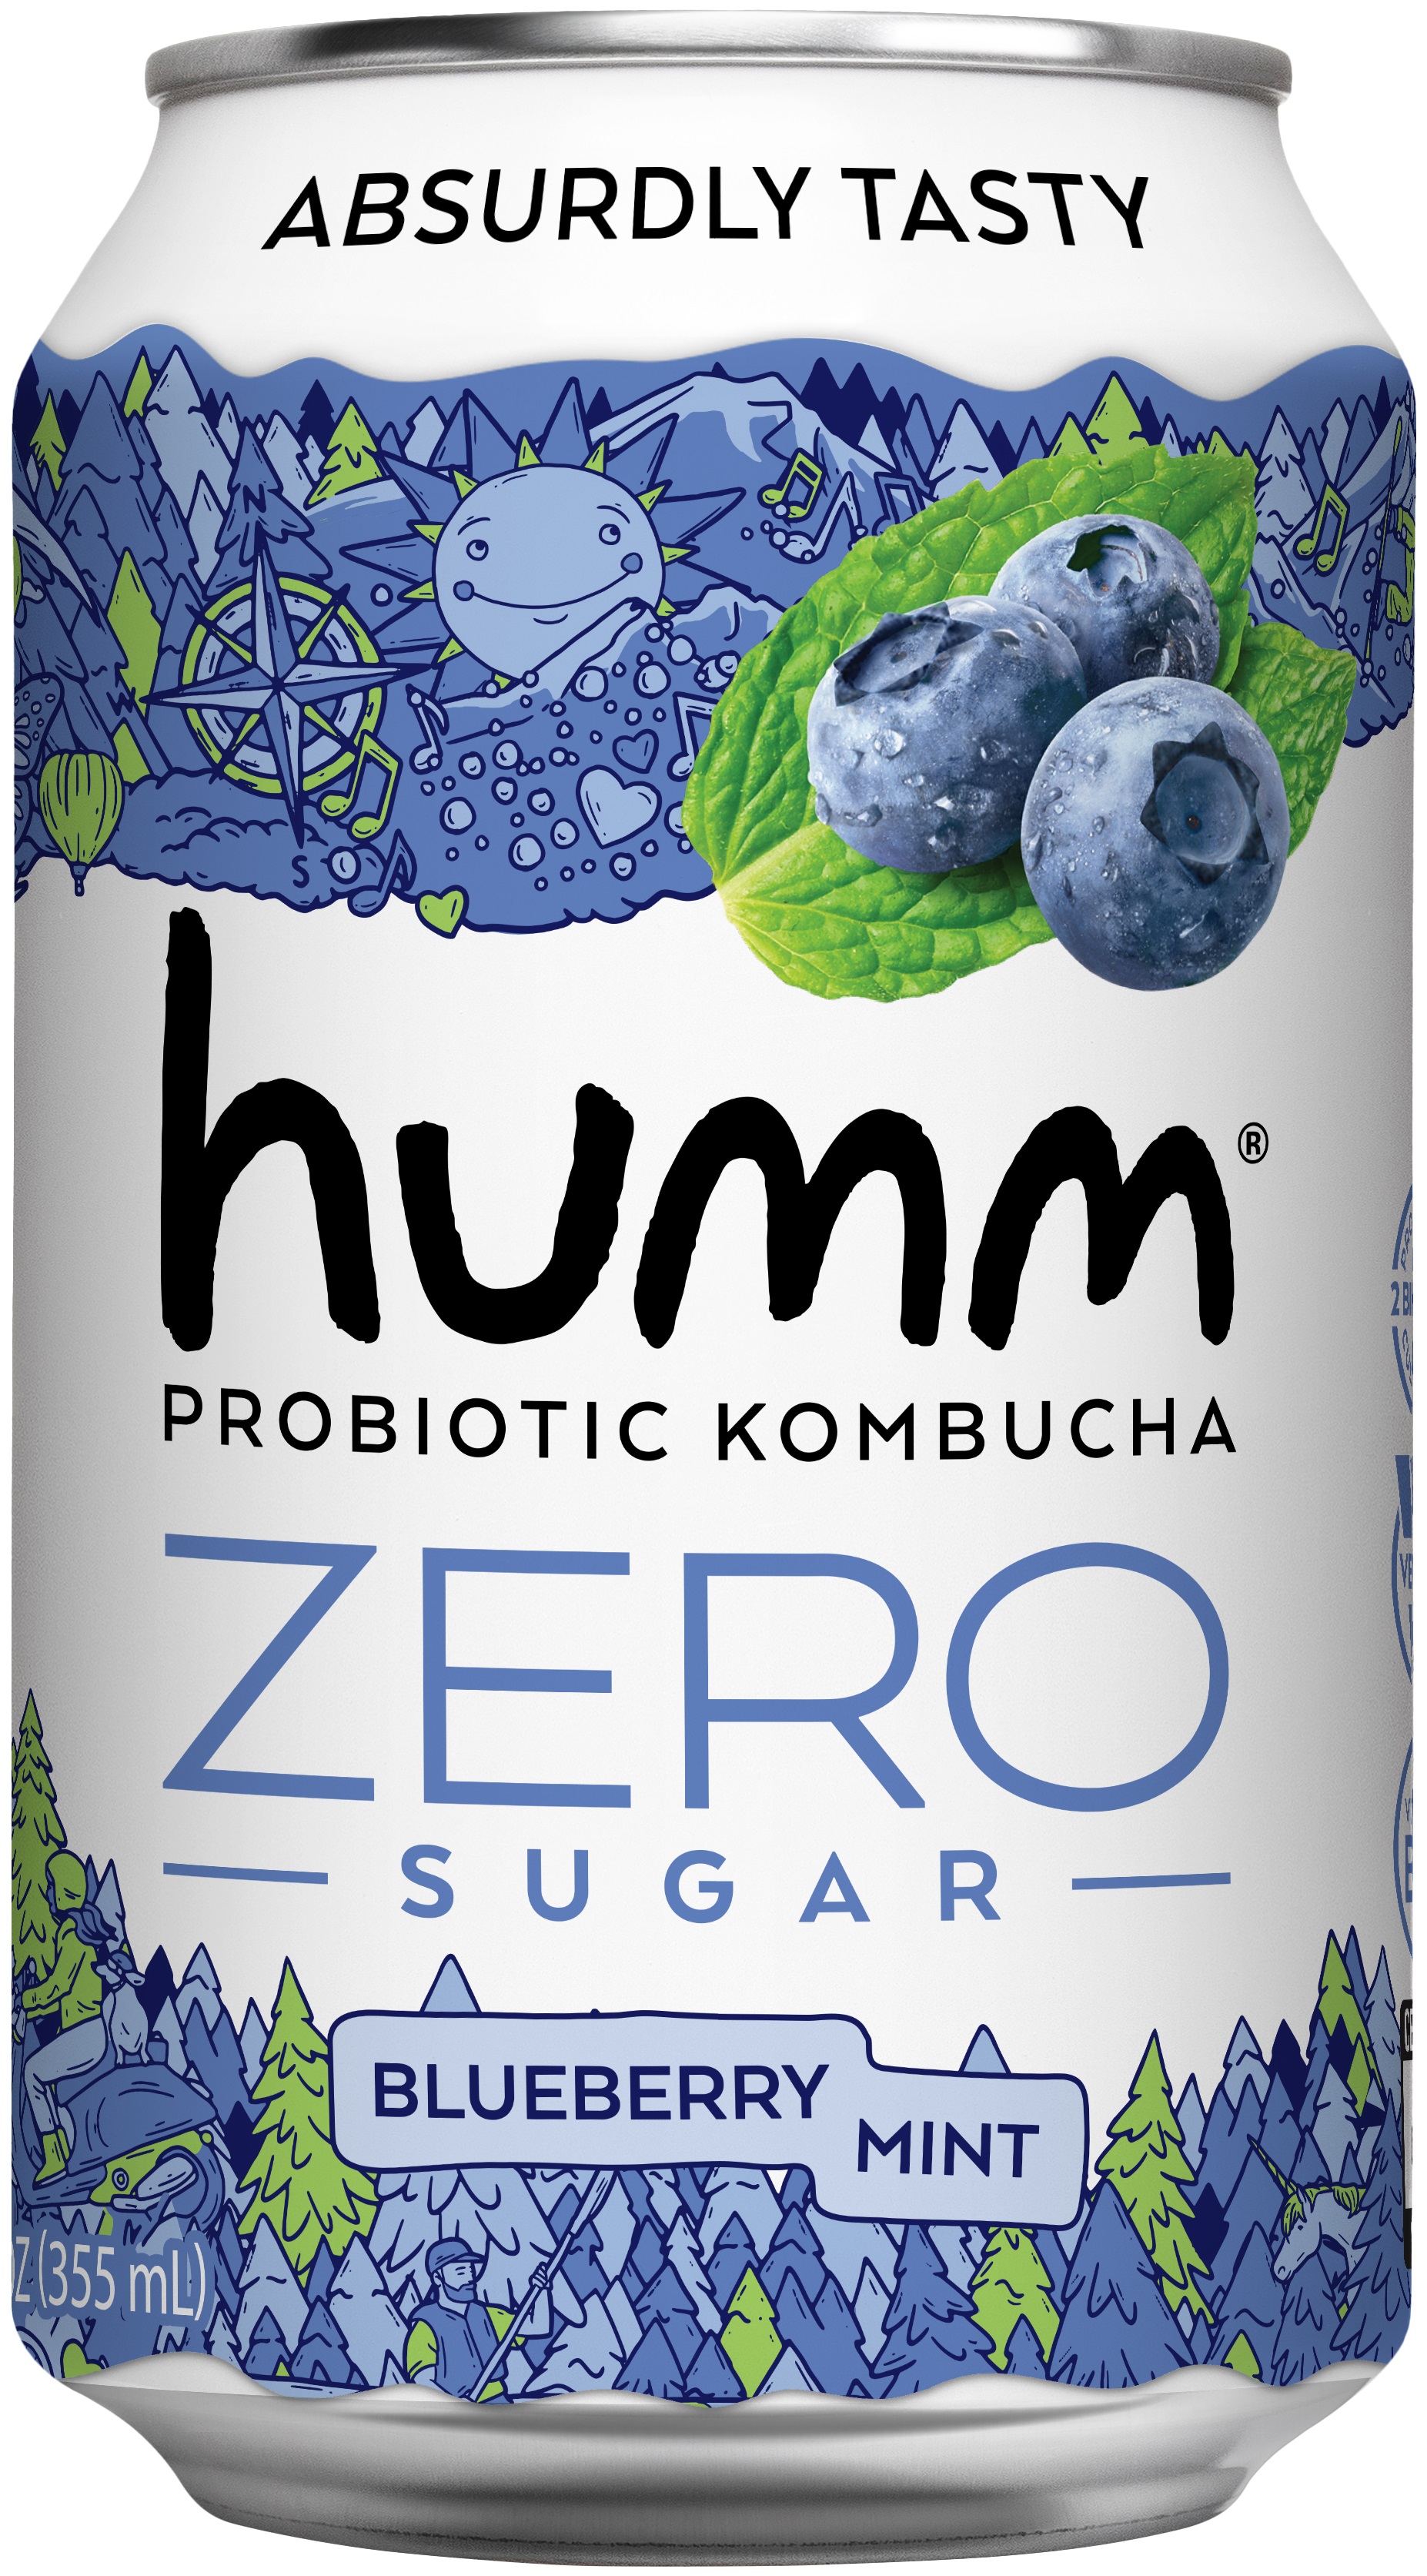 Humm Kombucha Zero Blueberry Mint 6 units per case 12.0 fl